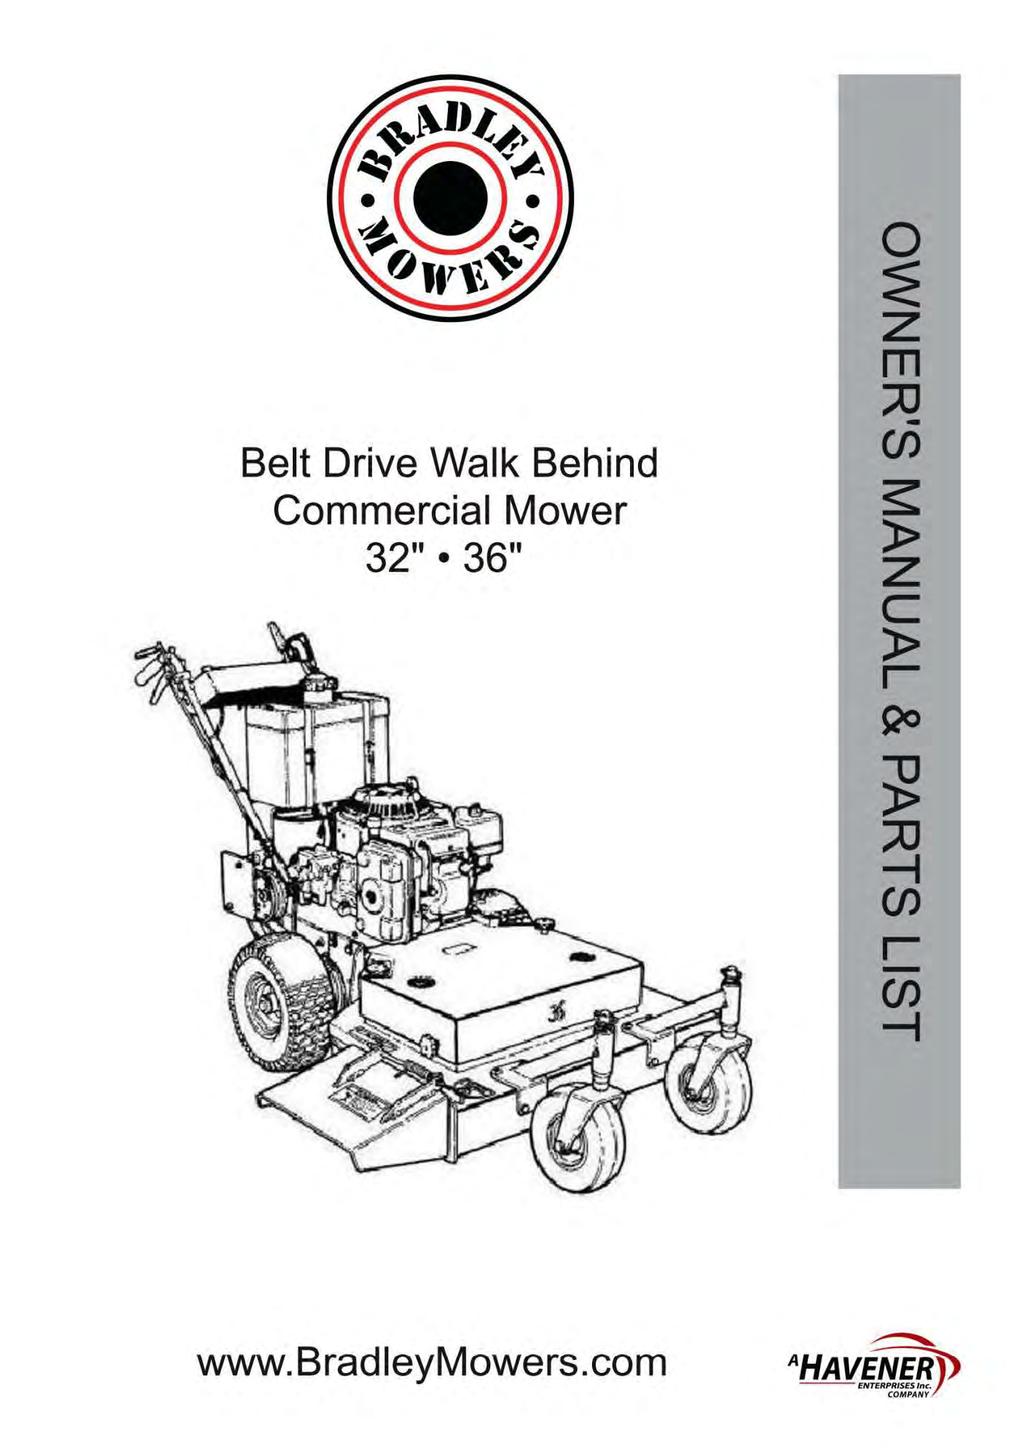 Belt Drive Walk Behind Commercial Mower 32" 36" 0 ~ z m ;c - en s::